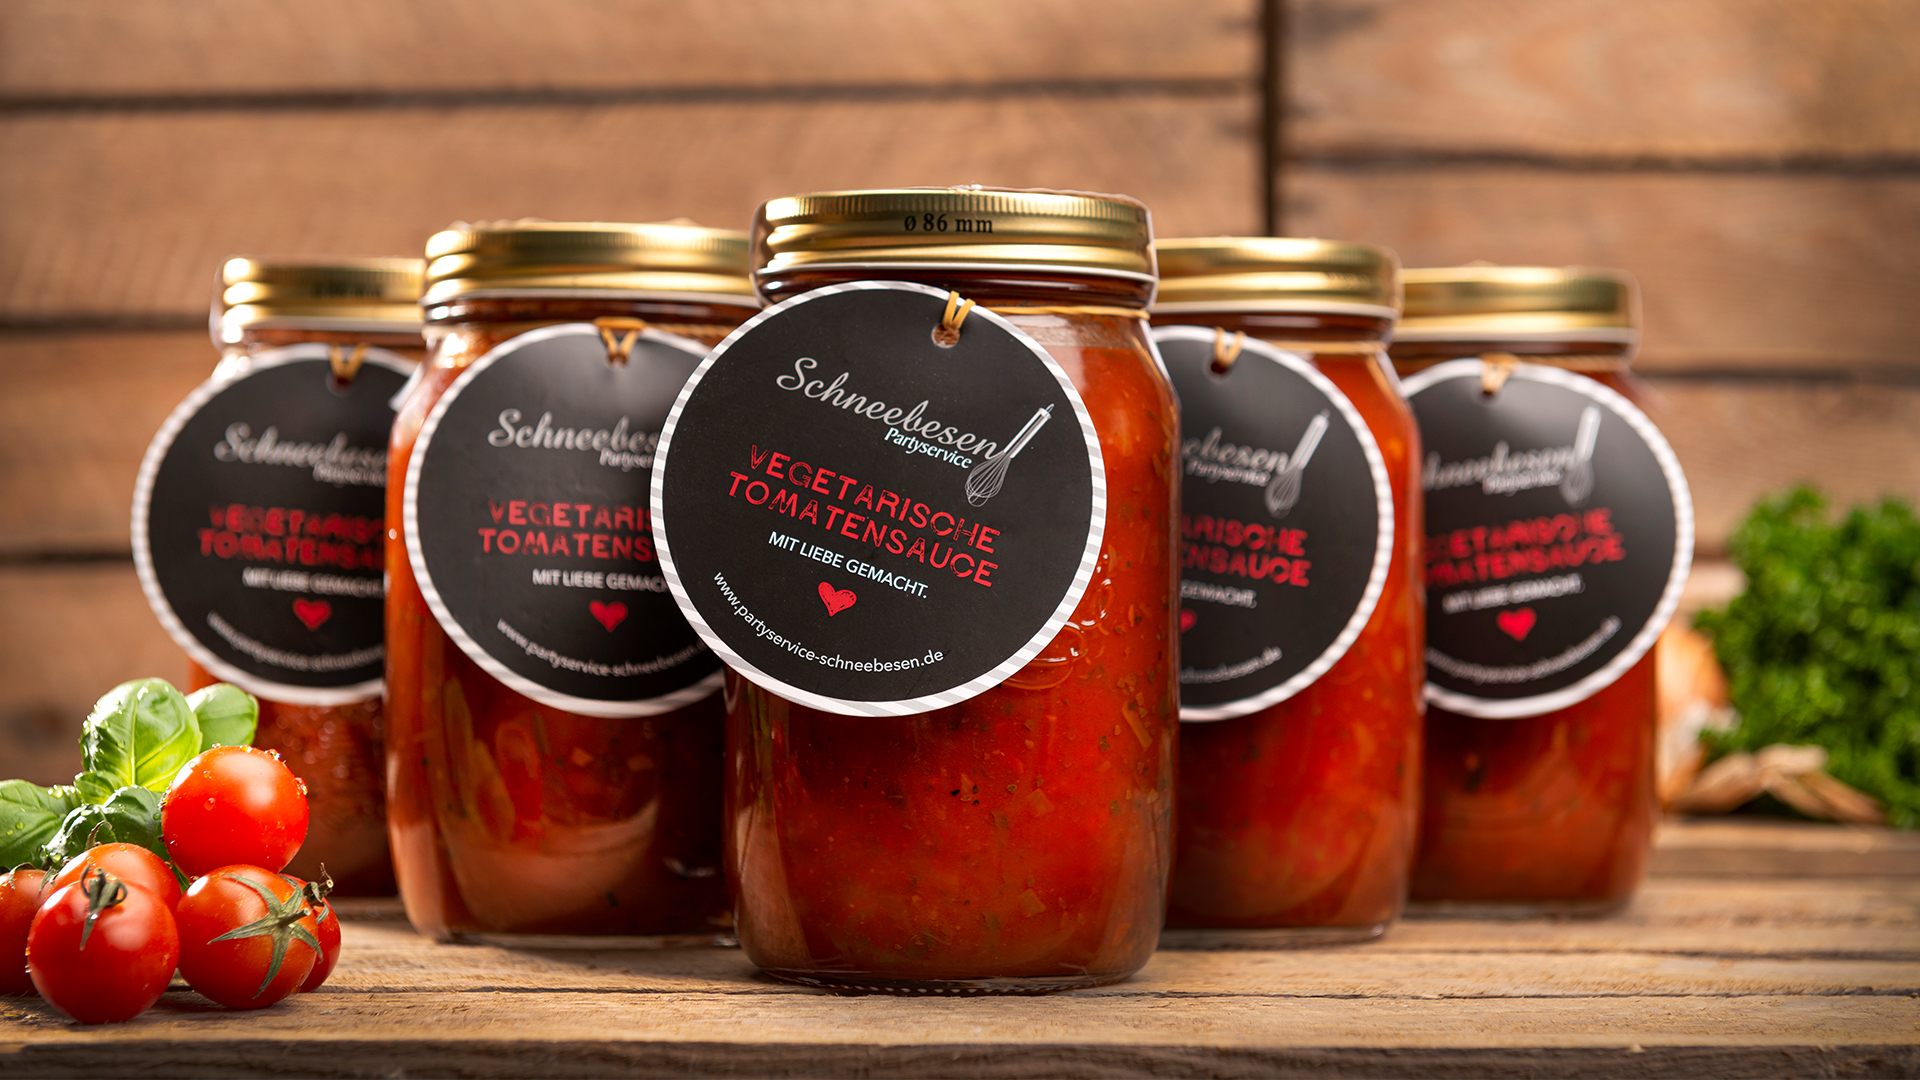 Scribble Werbeagentur nah bei Aachen zeigt Etiketten am Produkt vegetarische Tomatensause. 